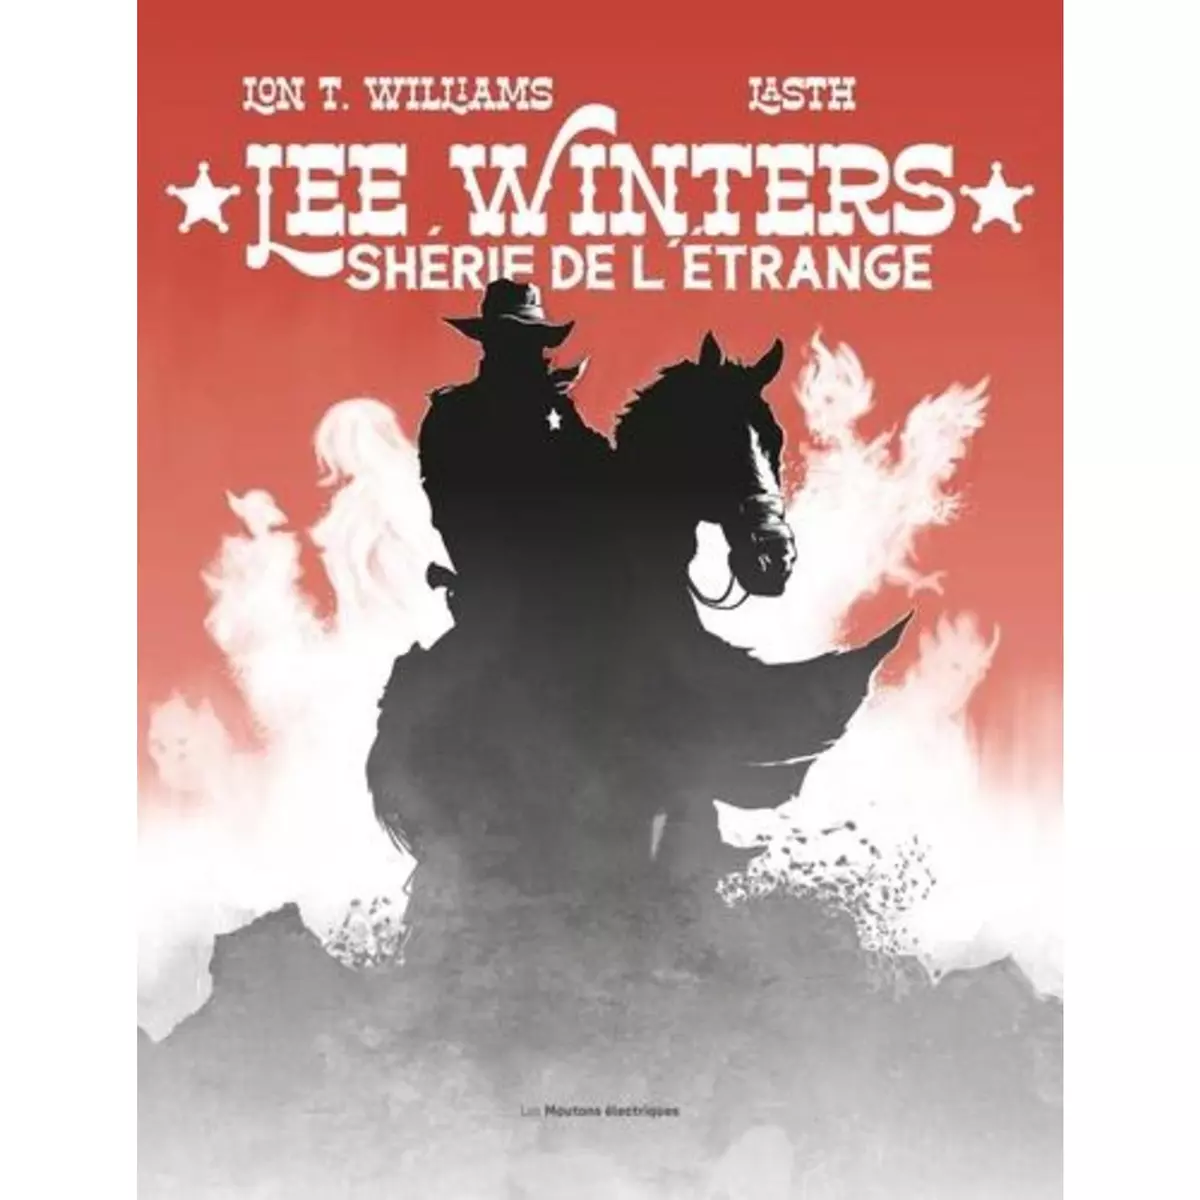  LEE WINTERS. SHERIF DE L'ETRANGE, Williams Lon Thomas